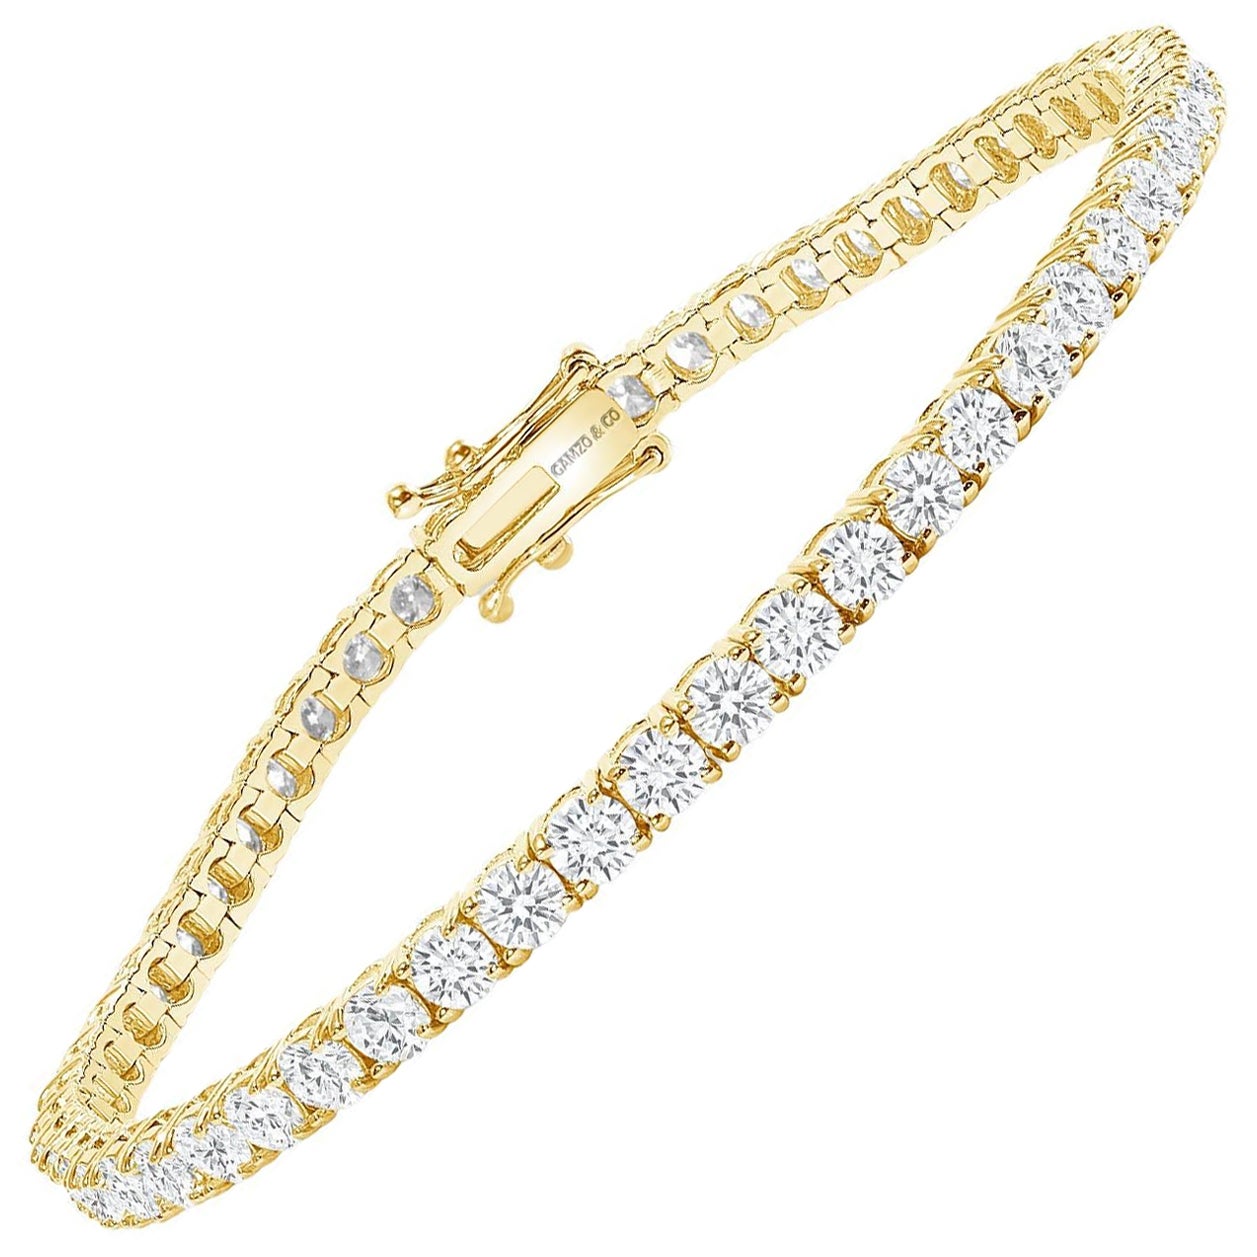 8 Inch 14K Yellow Gold 5 Carat Round Diamond Tennis Bracelet For Sale